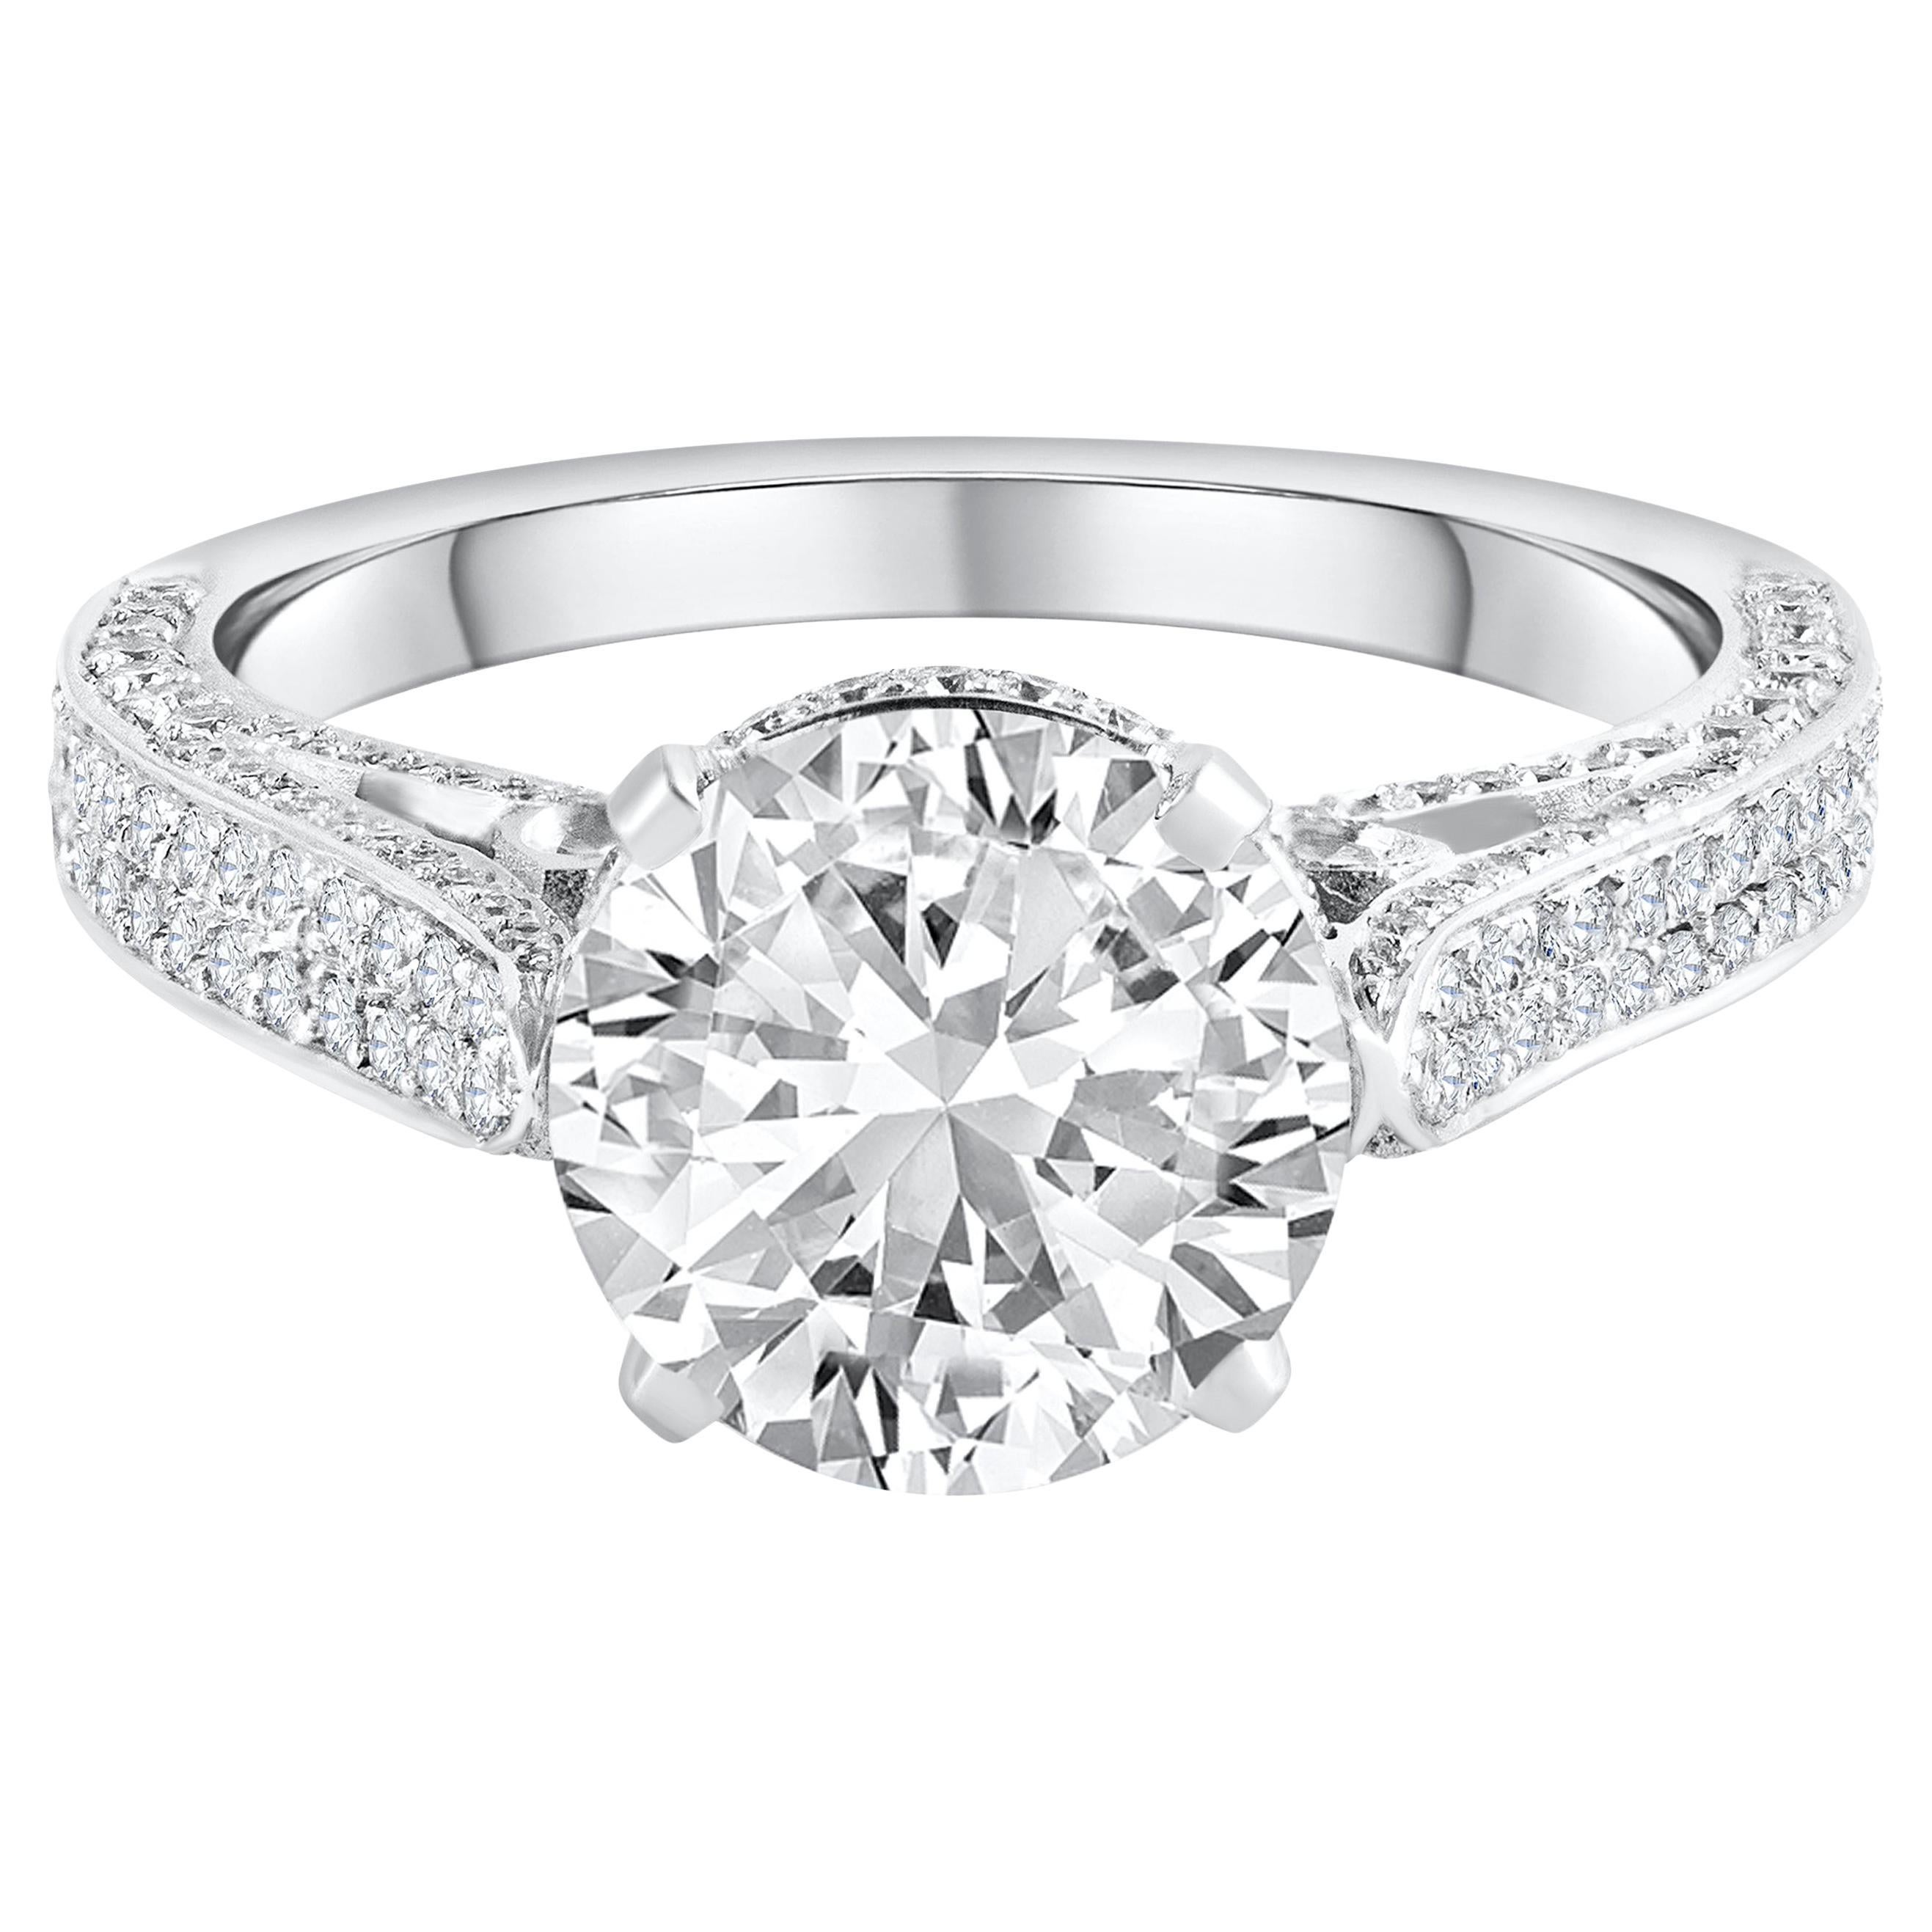 Roman Malakov 2.75 Carats Brilliant Round Cut Diamond Pave Engagement Ring